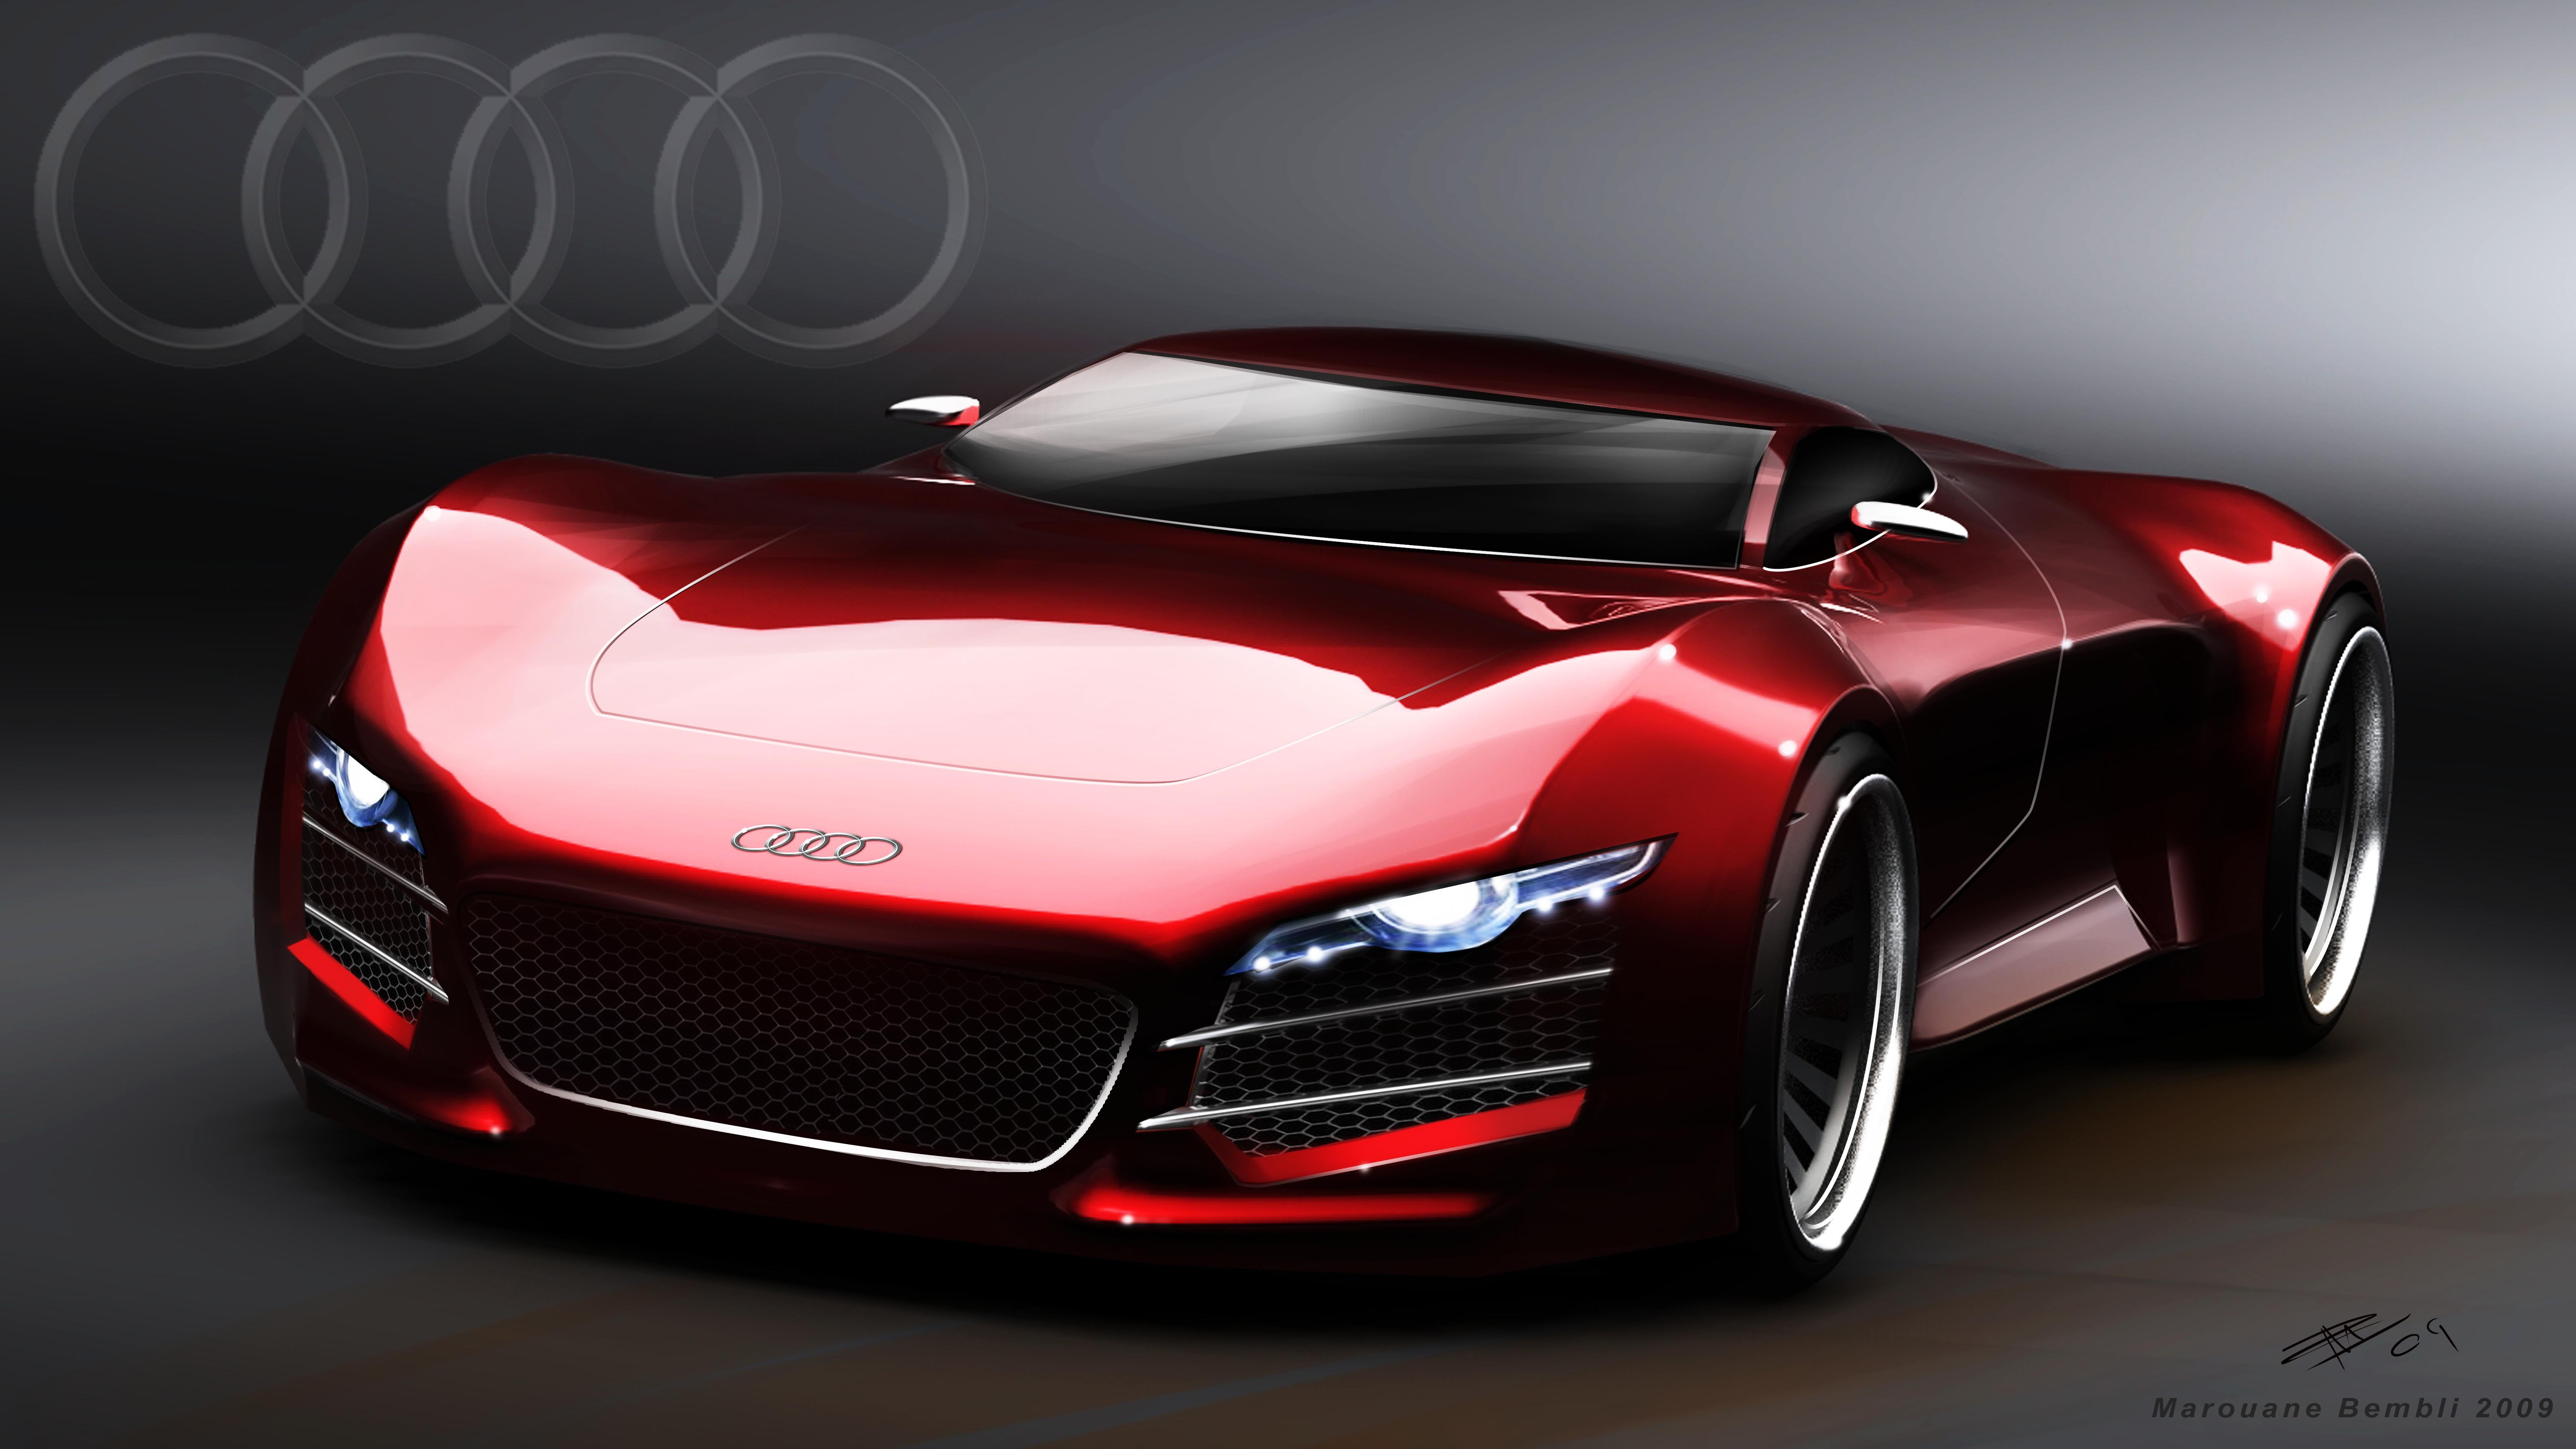 red Audi supercar, Audi s8, motor vehicle, transportation, mode of transportation